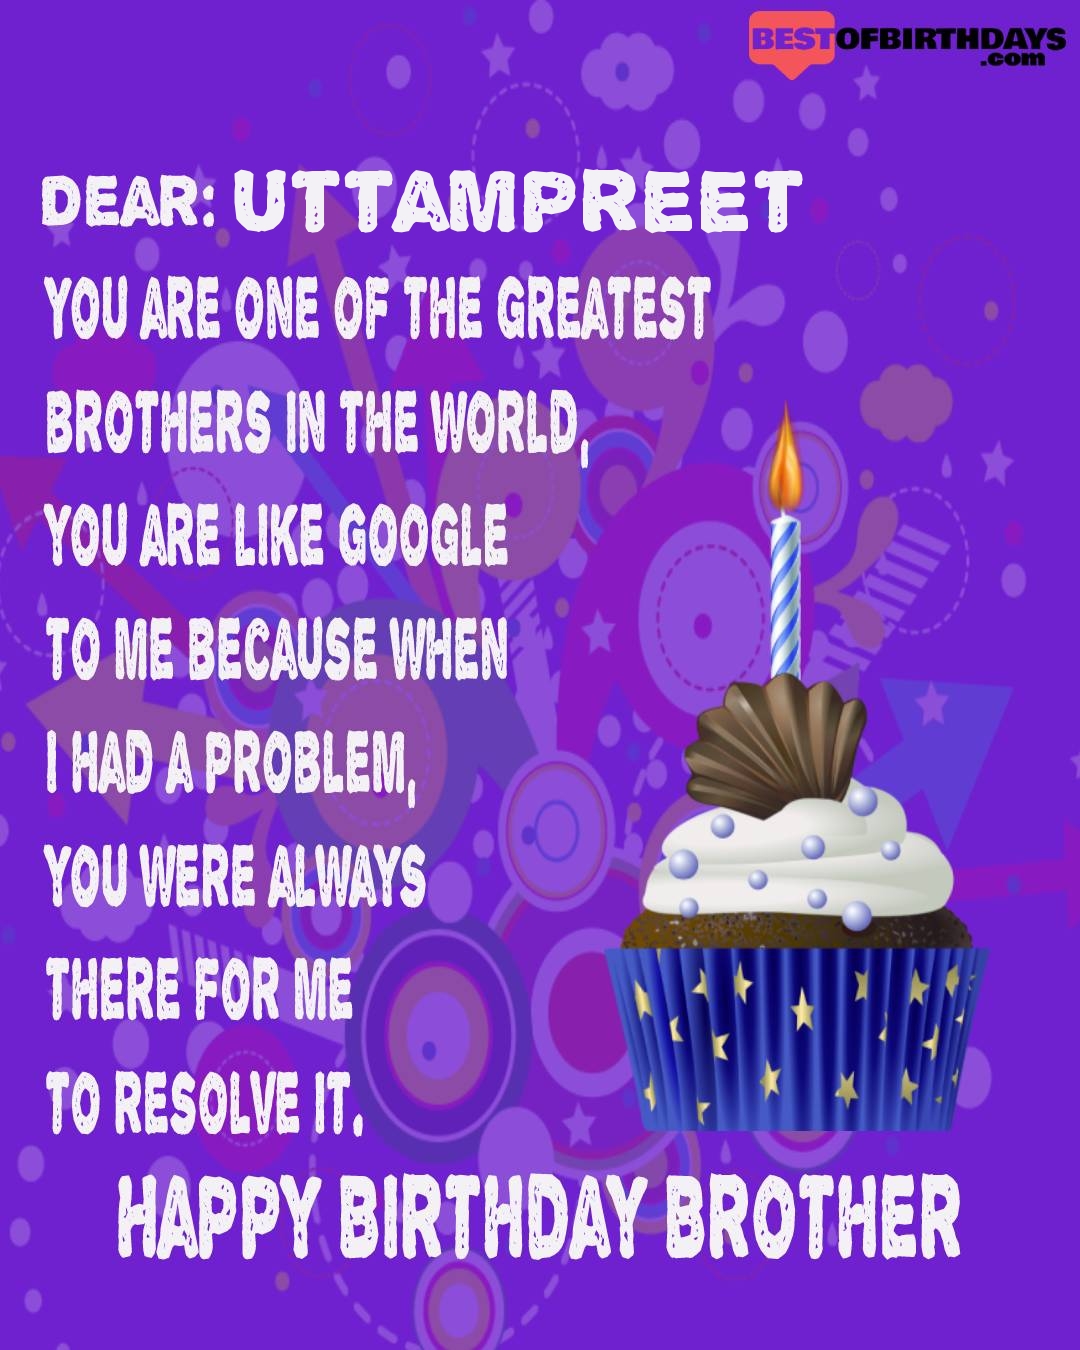 Happy birthday uttampreet bhai brother bro